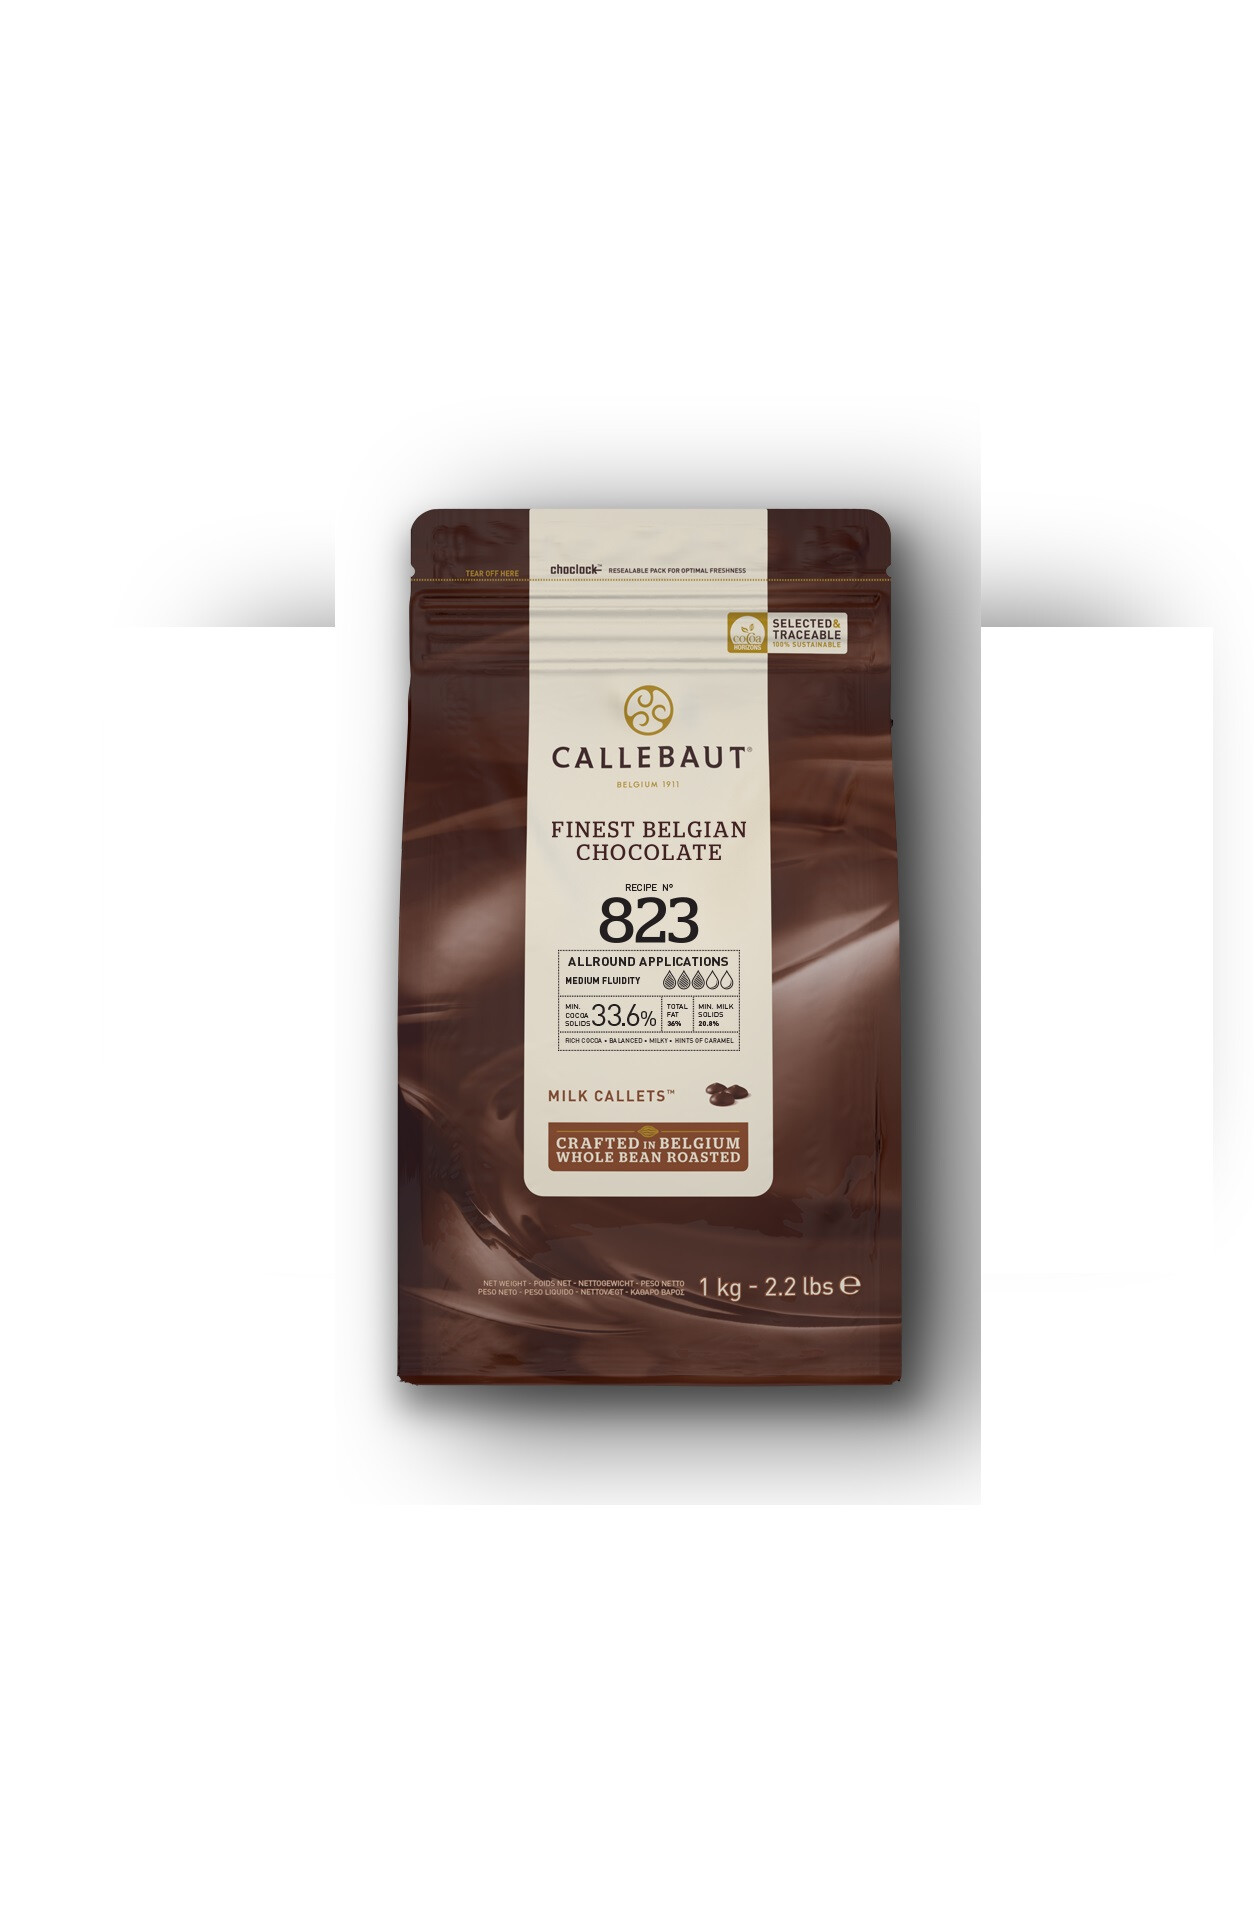 Callebaut Chocolate callets 823 milk 1kg 2.2lbs